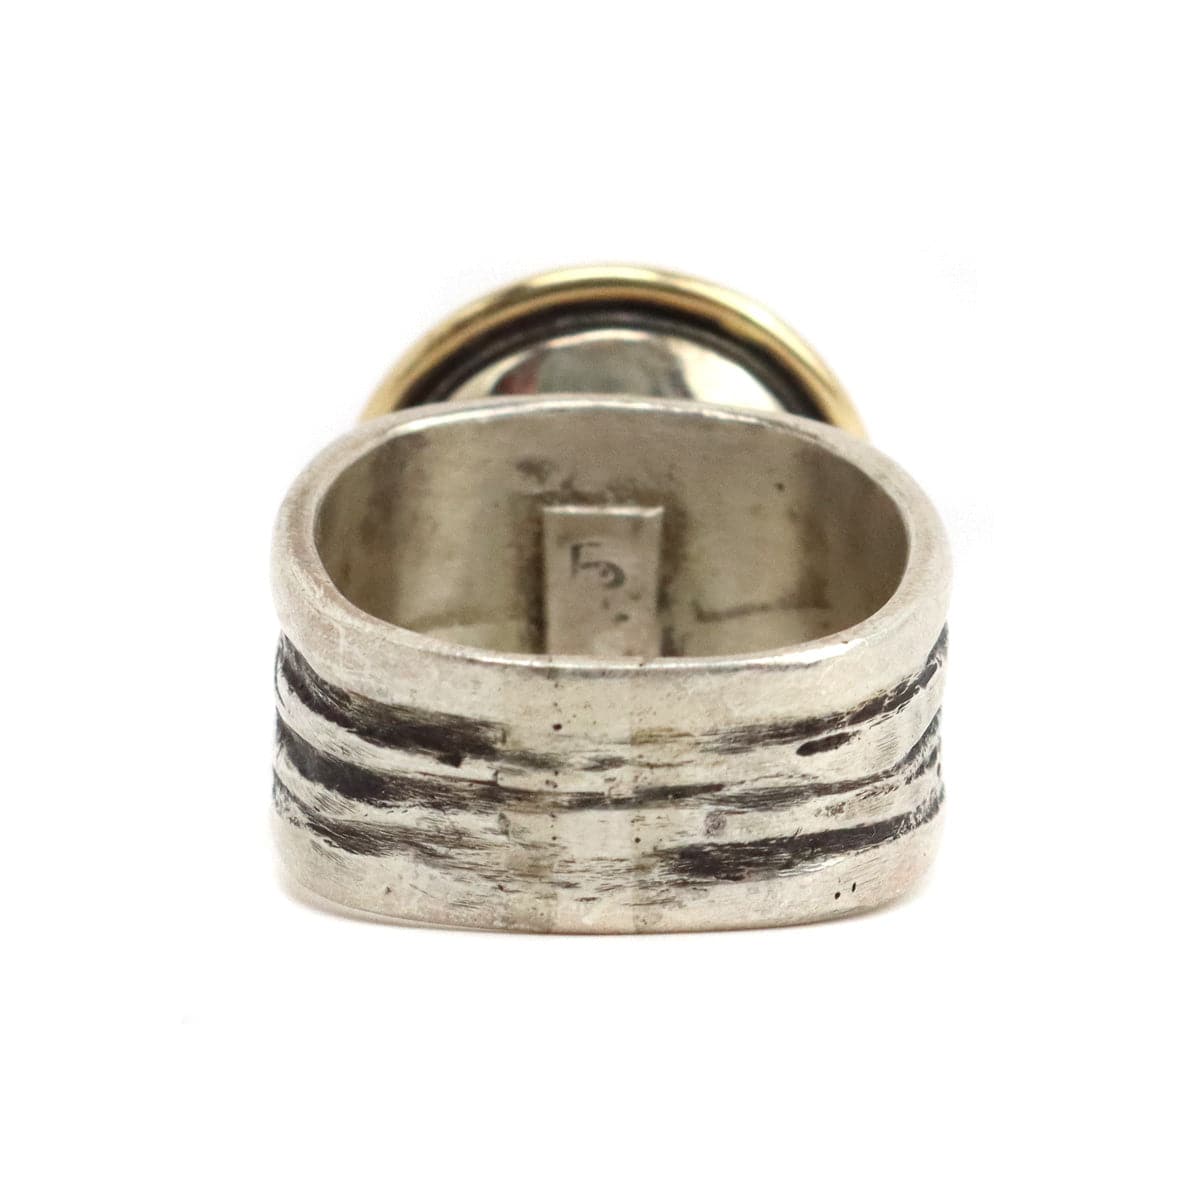 Frank Frank Jr. - Amethyst and 14K Gold Ring, size 9.75 (J91699-0123-009) 3